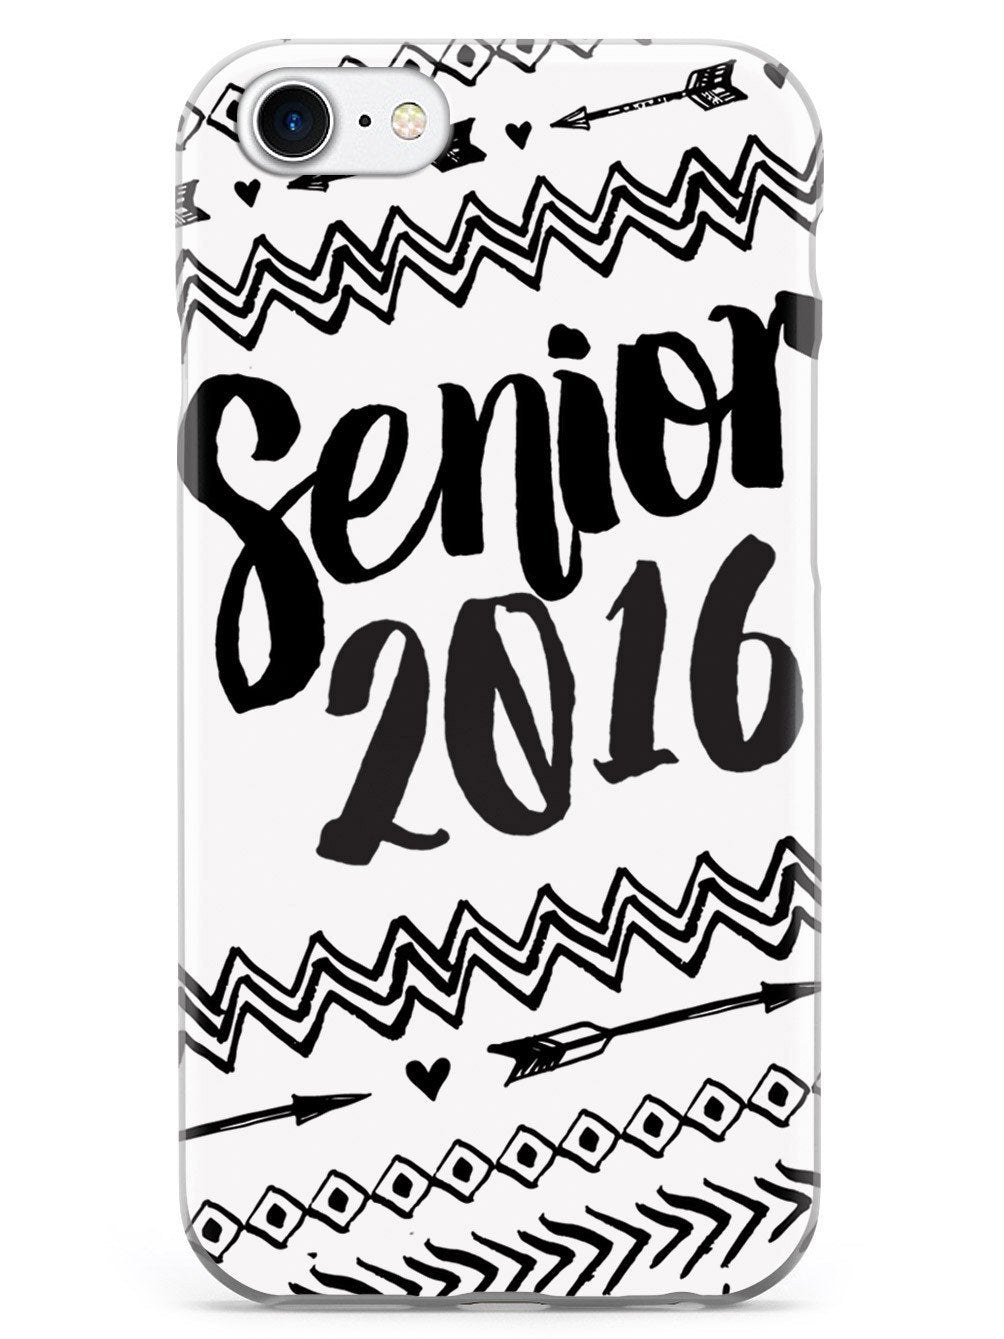 Senior 2016 - Black Case